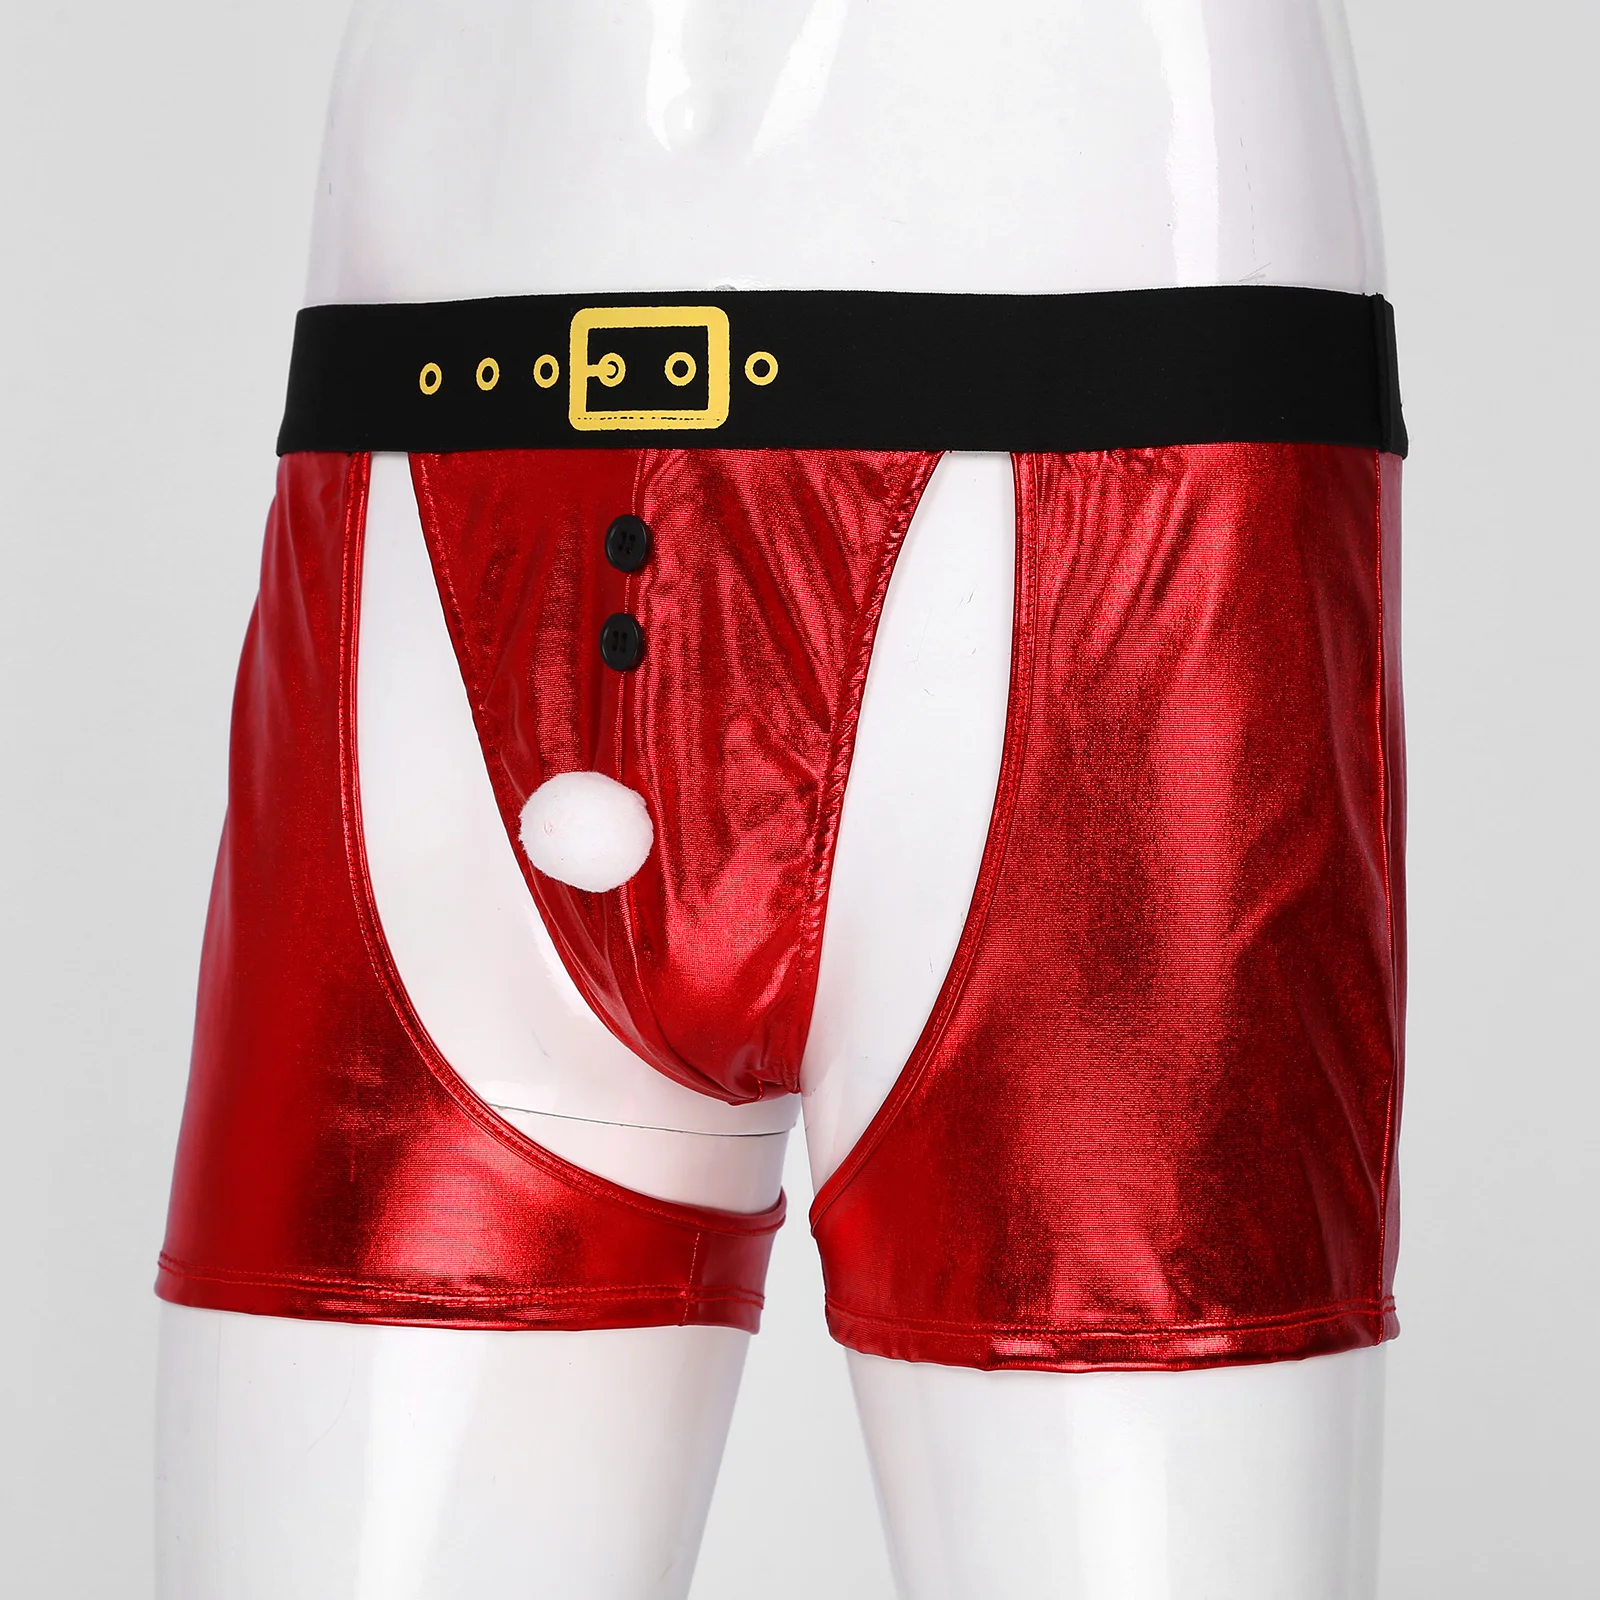 US Men Christmas Underwear Briefs Leather Shiny Boxer Shorts Santa Claus Costume